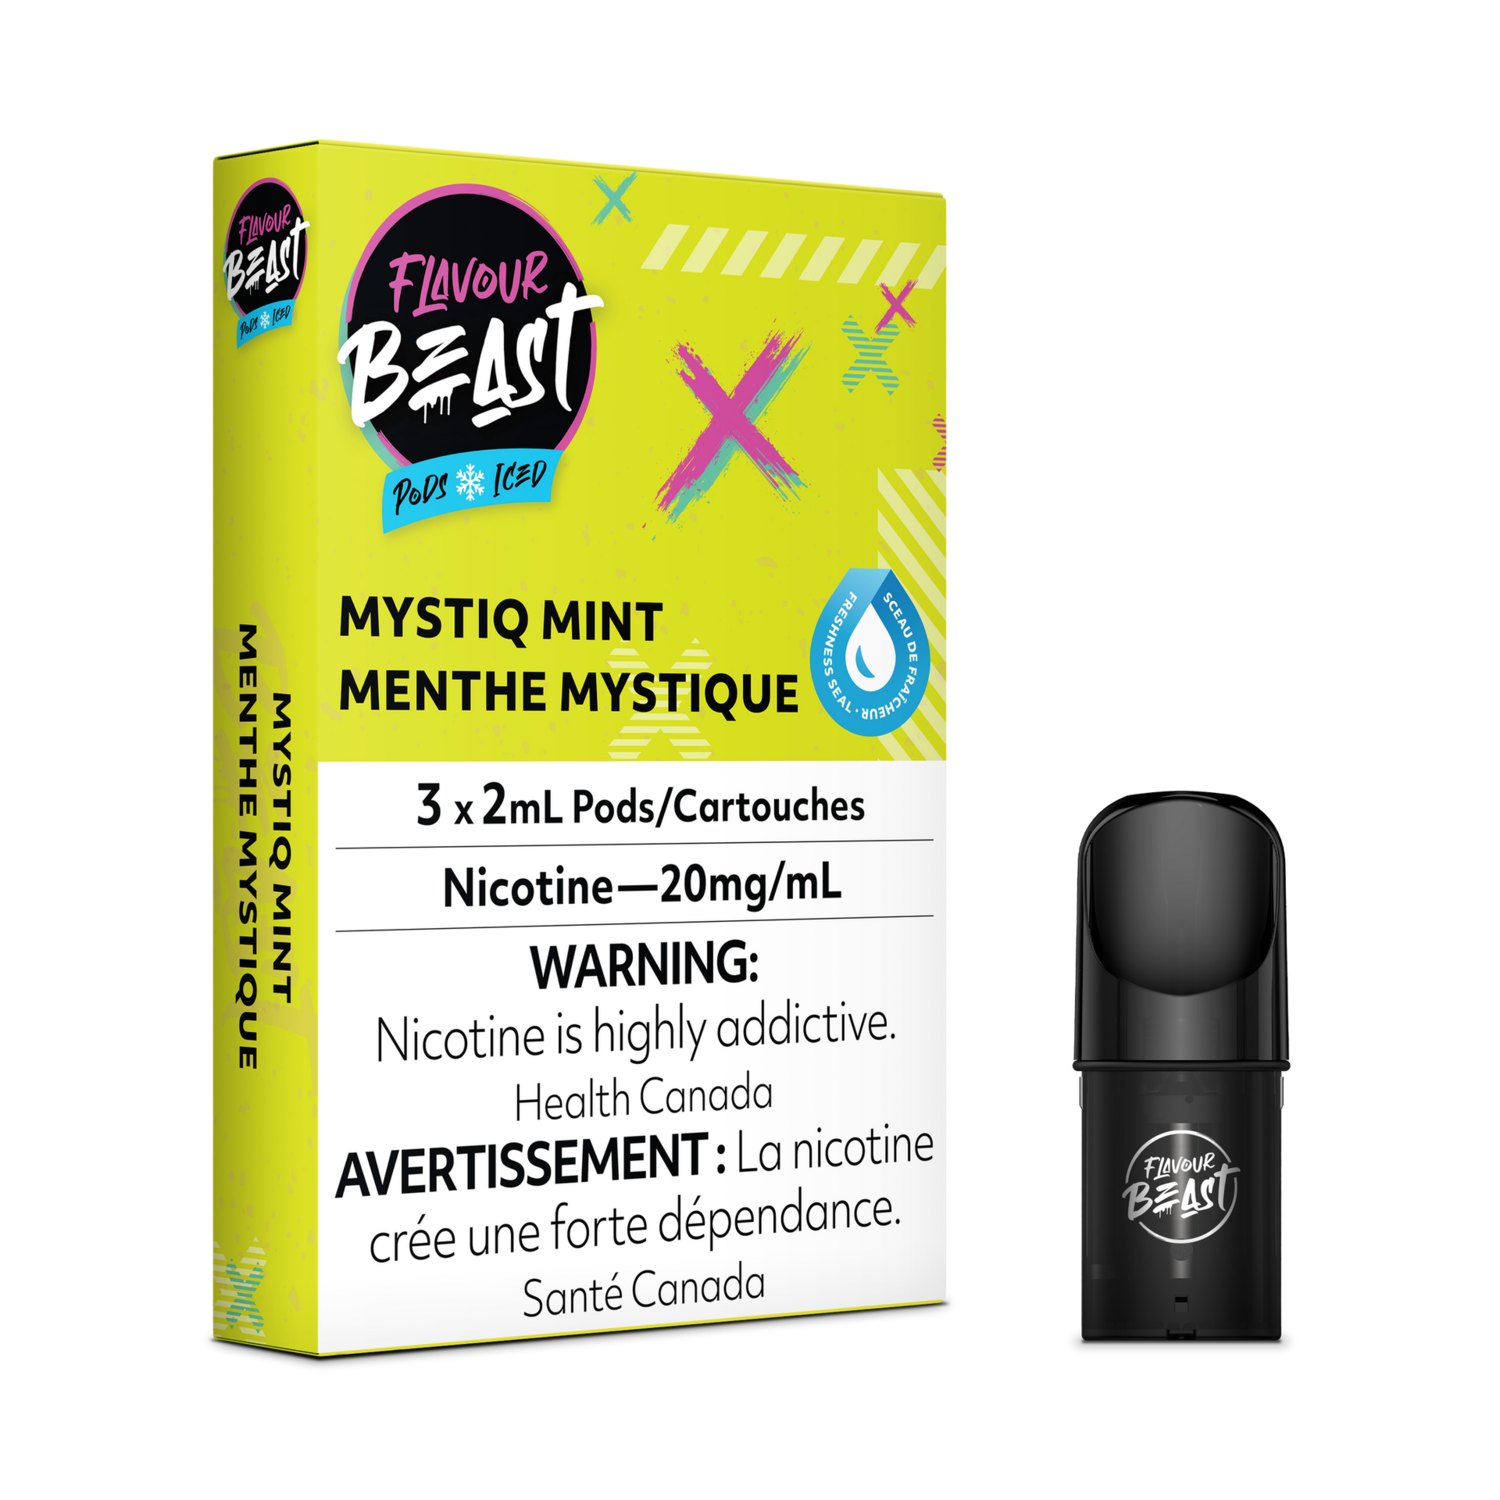 Mystiq Mint Iced - Flavour Beast Pods (S-Compatible)